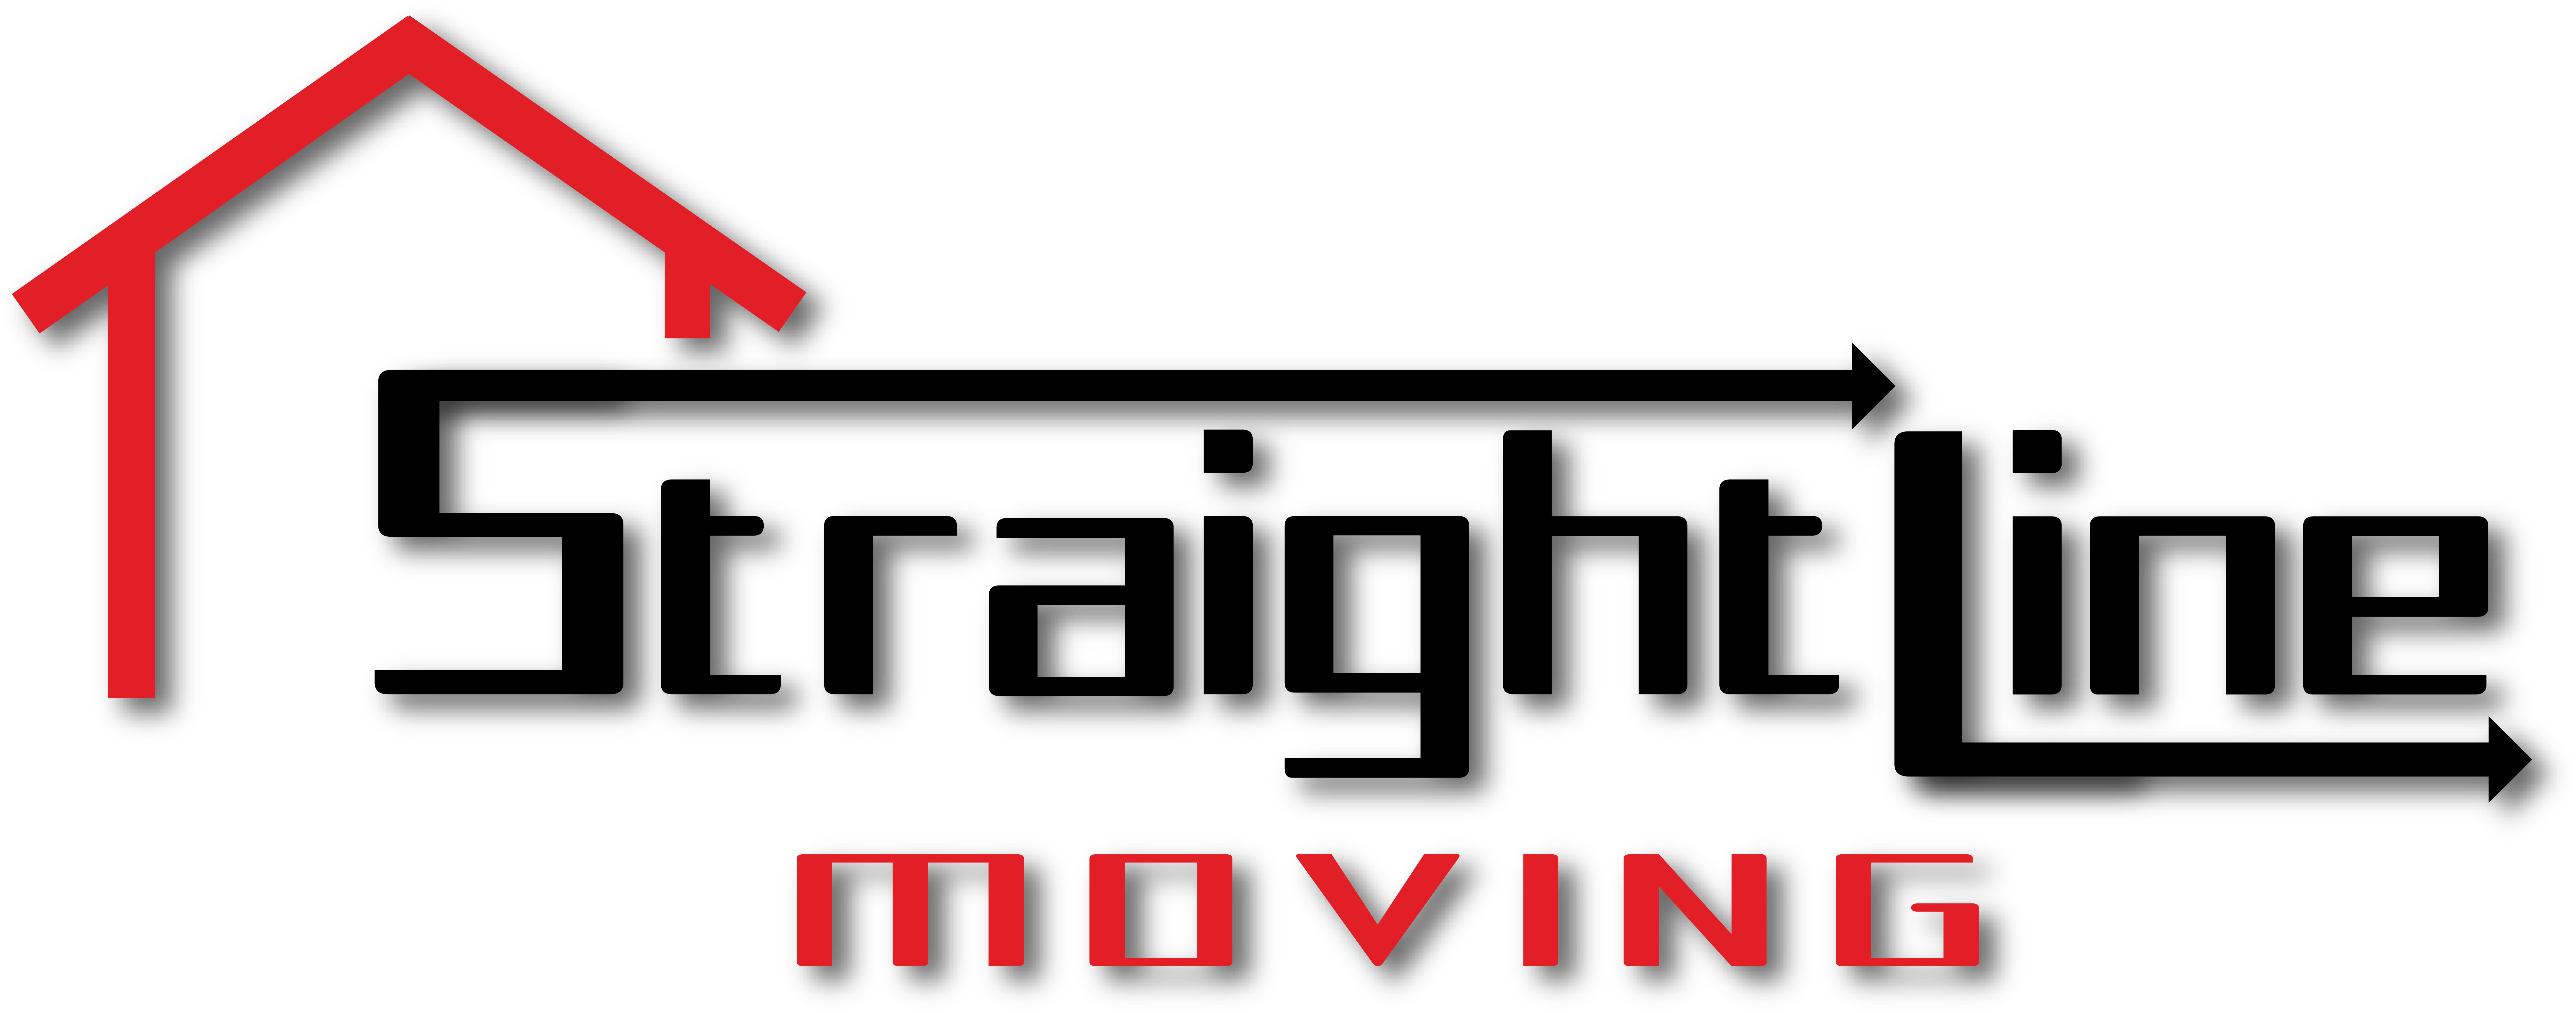 Straightline Moving Company Straightline Moving Company - Straightline Moving Inc. (7933x3133)